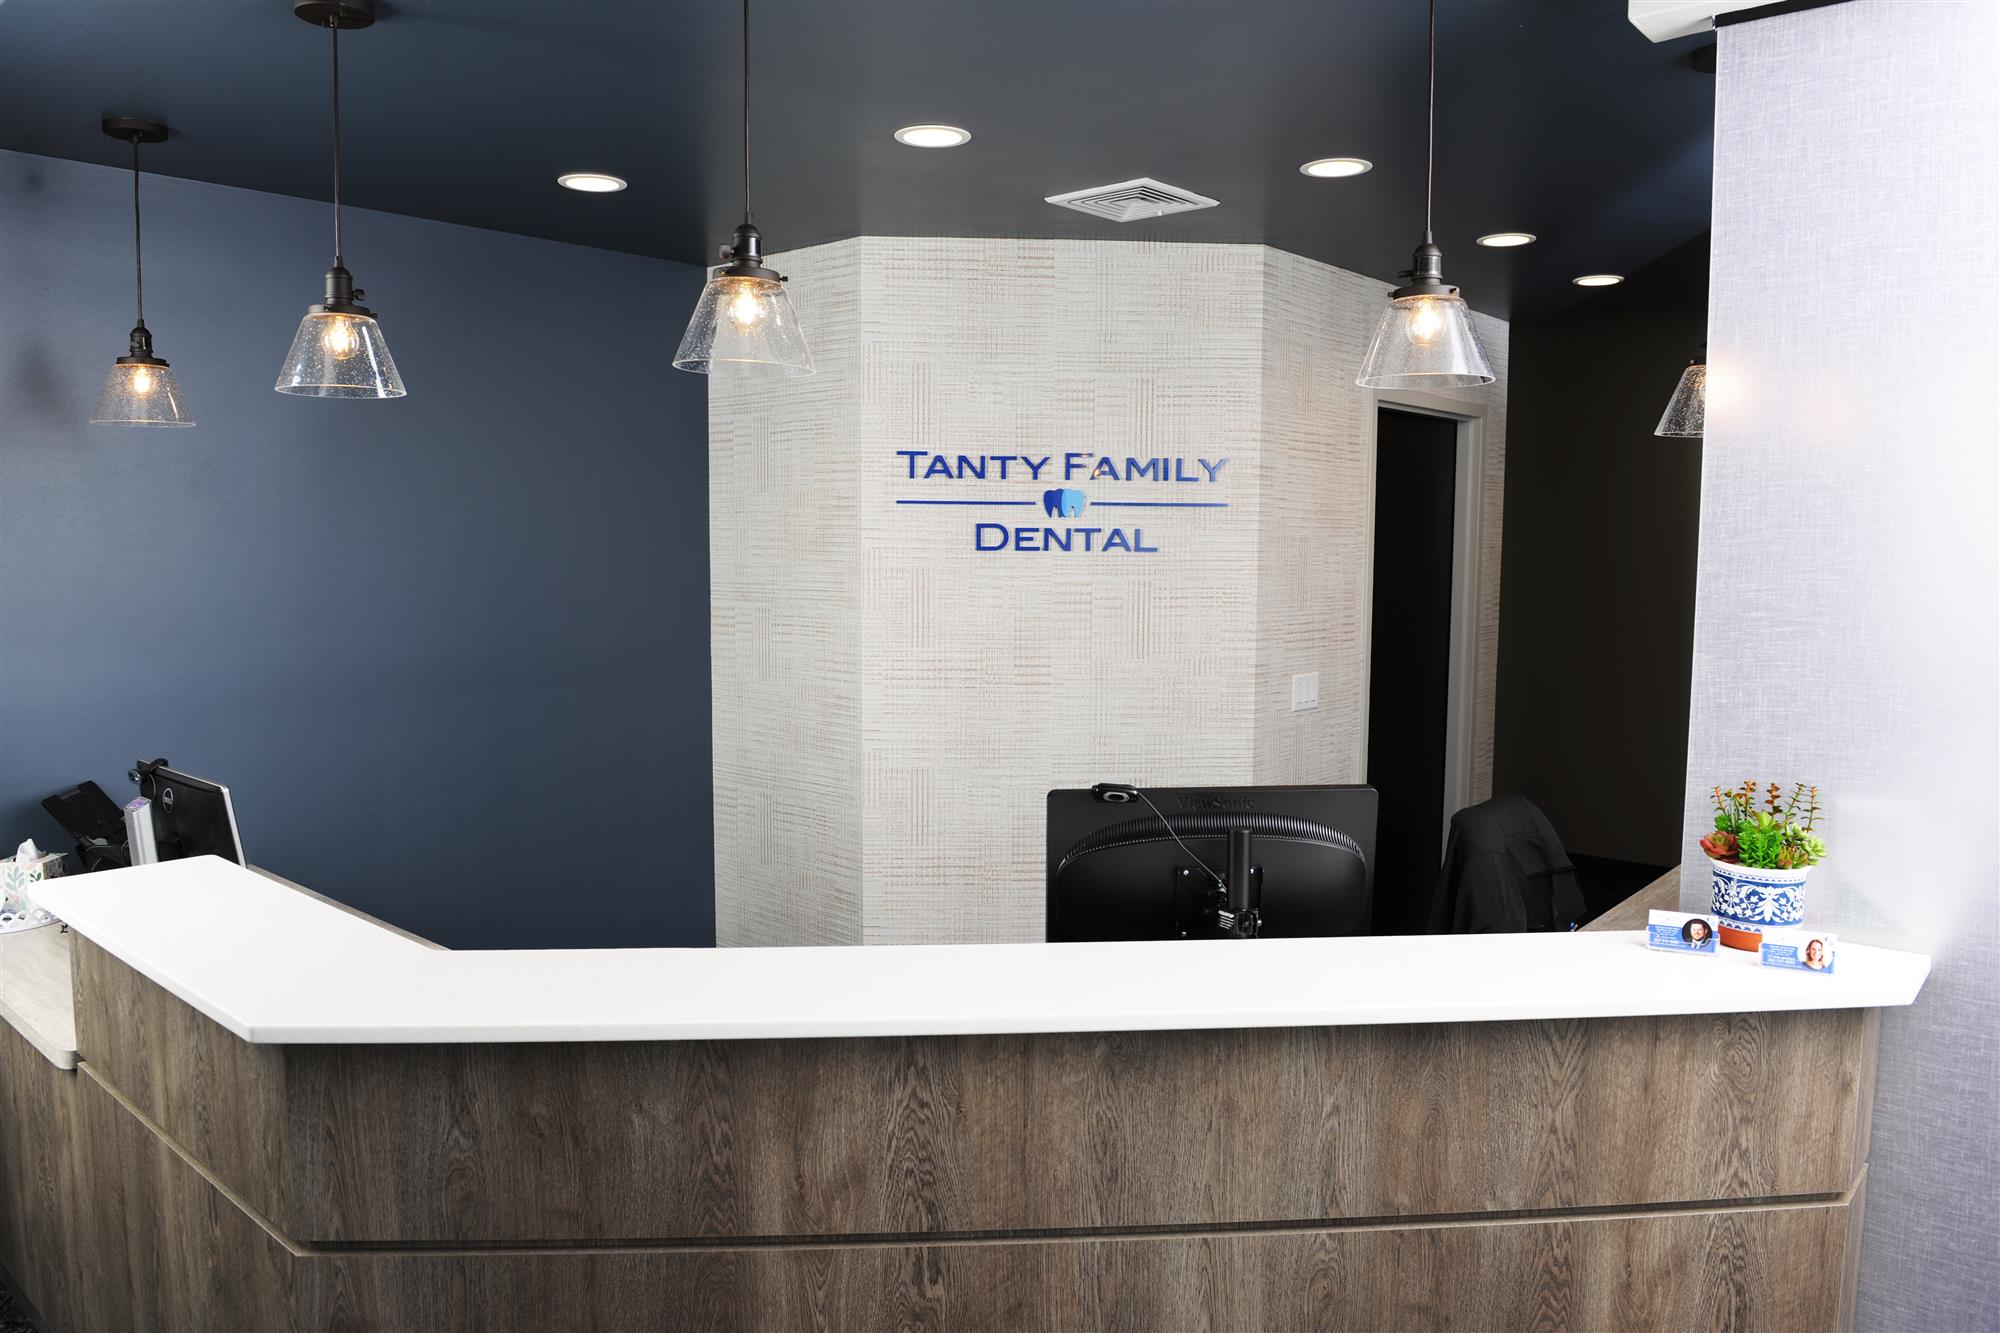 Tanty Family Dental Receptionist Desk